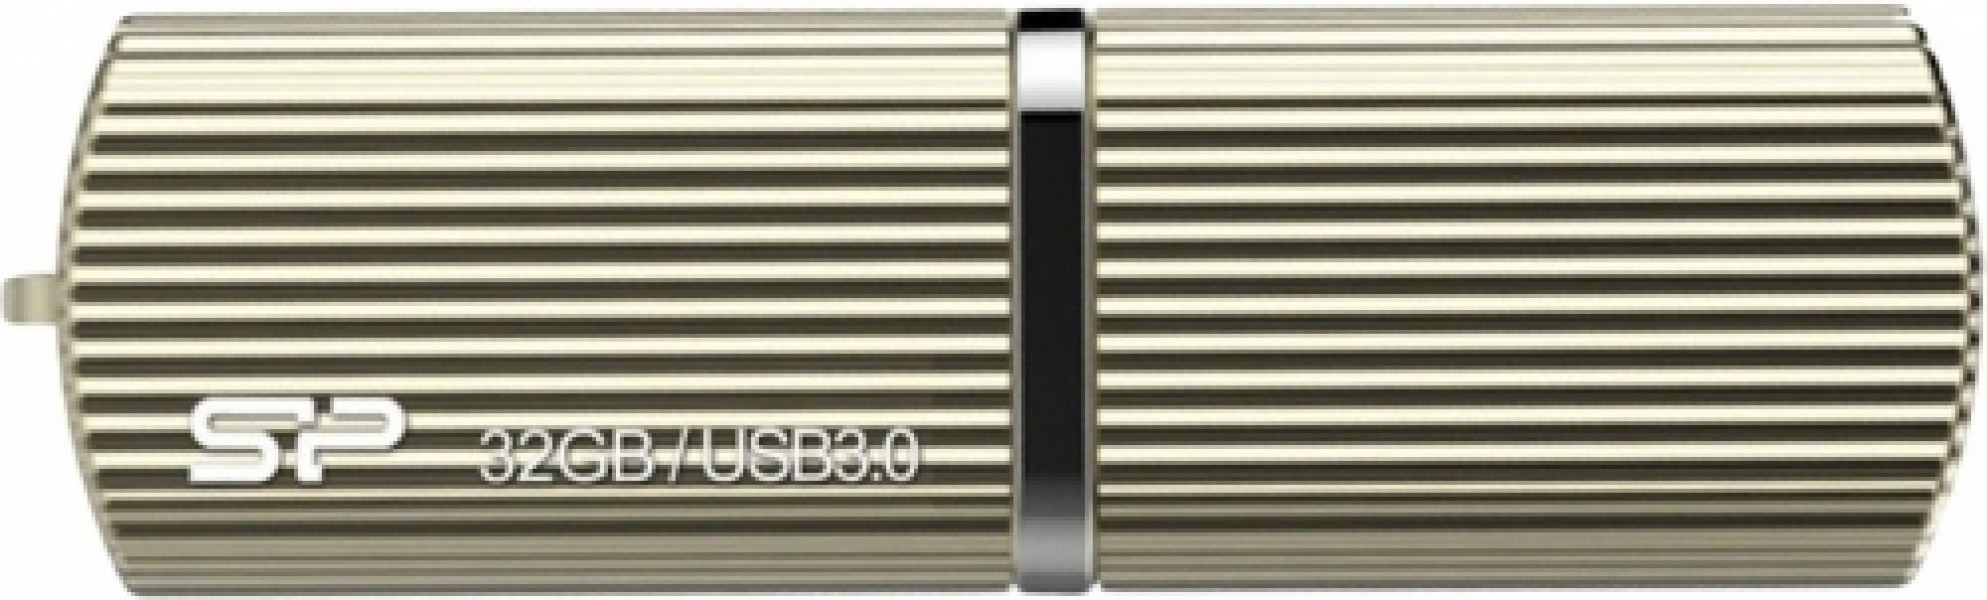 Silicon Power Marvel M50 32GB USB 3.0 Champague